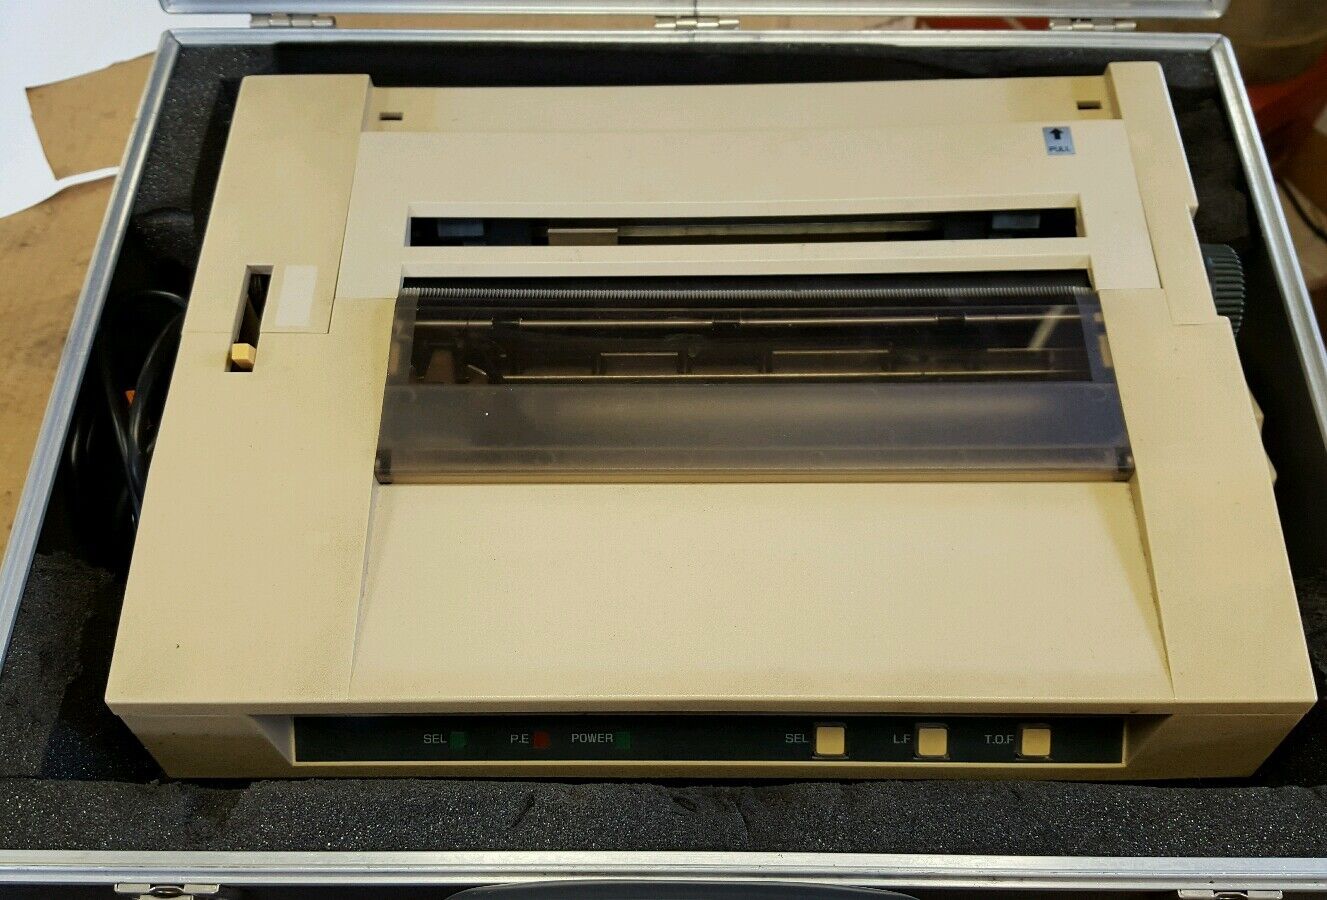 Vintage Printer - Model 8510 - C. Itoh Electronics Inc.